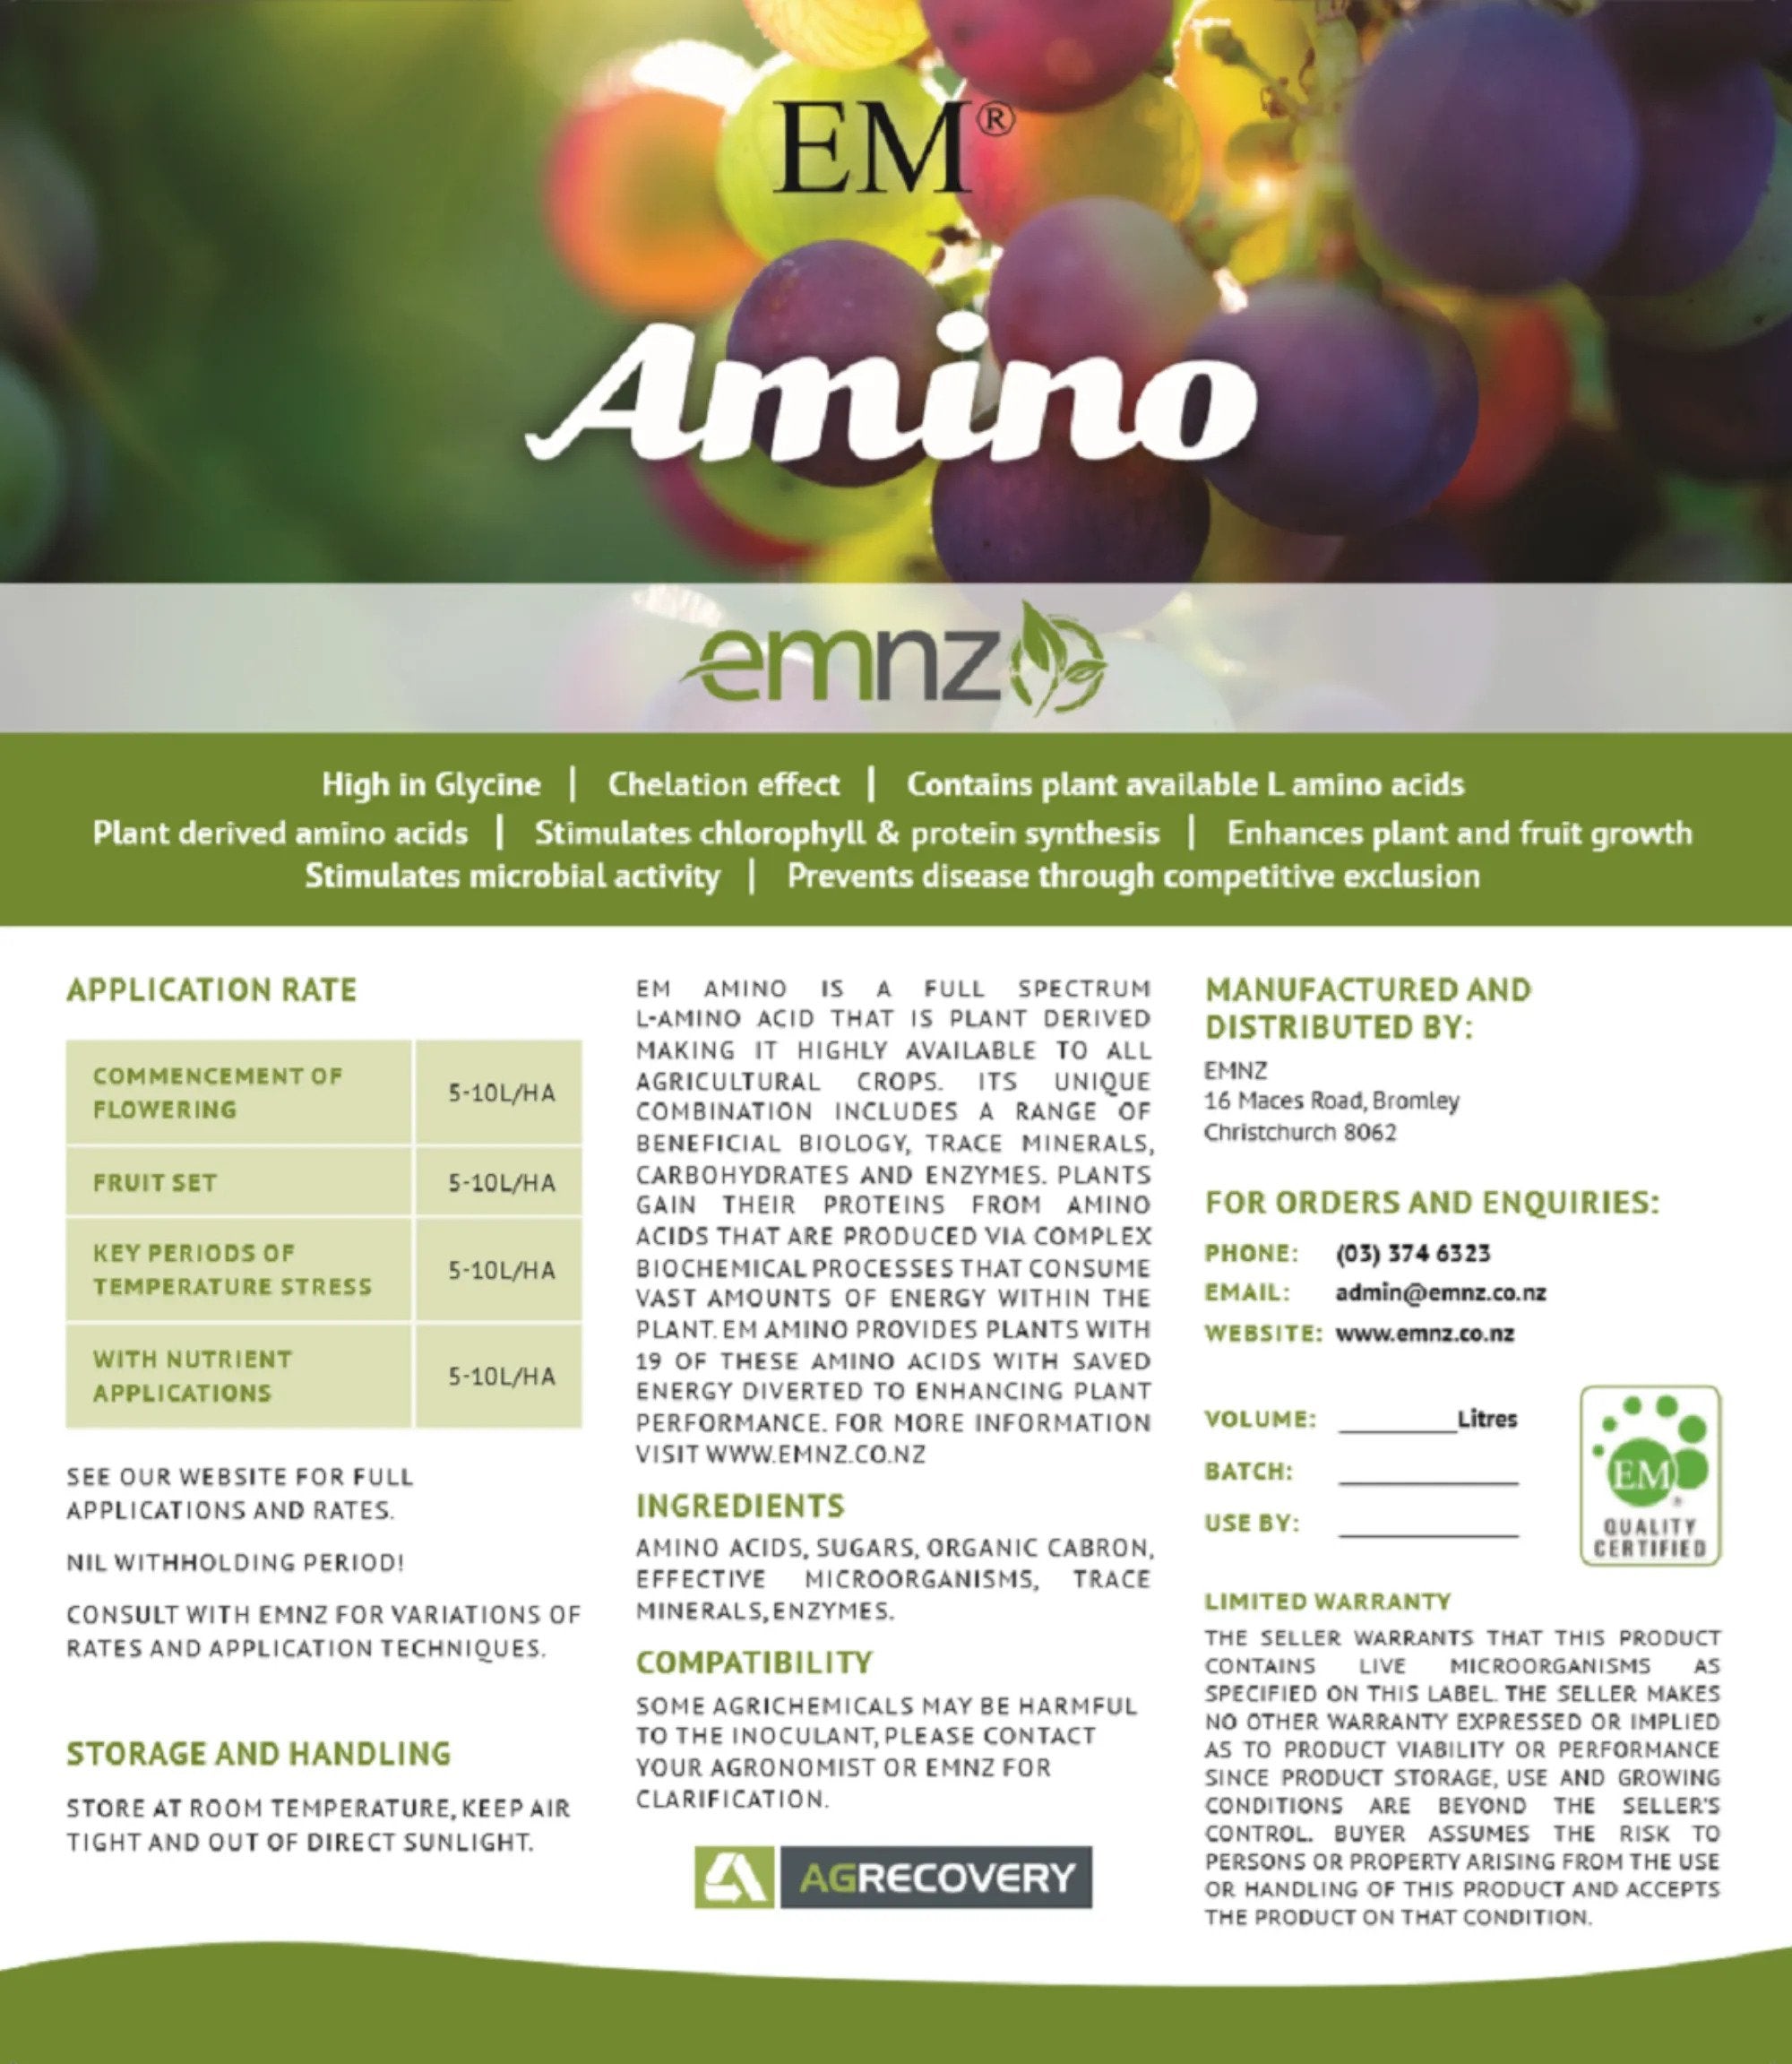 EM™ Amino | Full Spectrum, Plant-Derived L-Amino Acid | Buy Online EMNZ.com